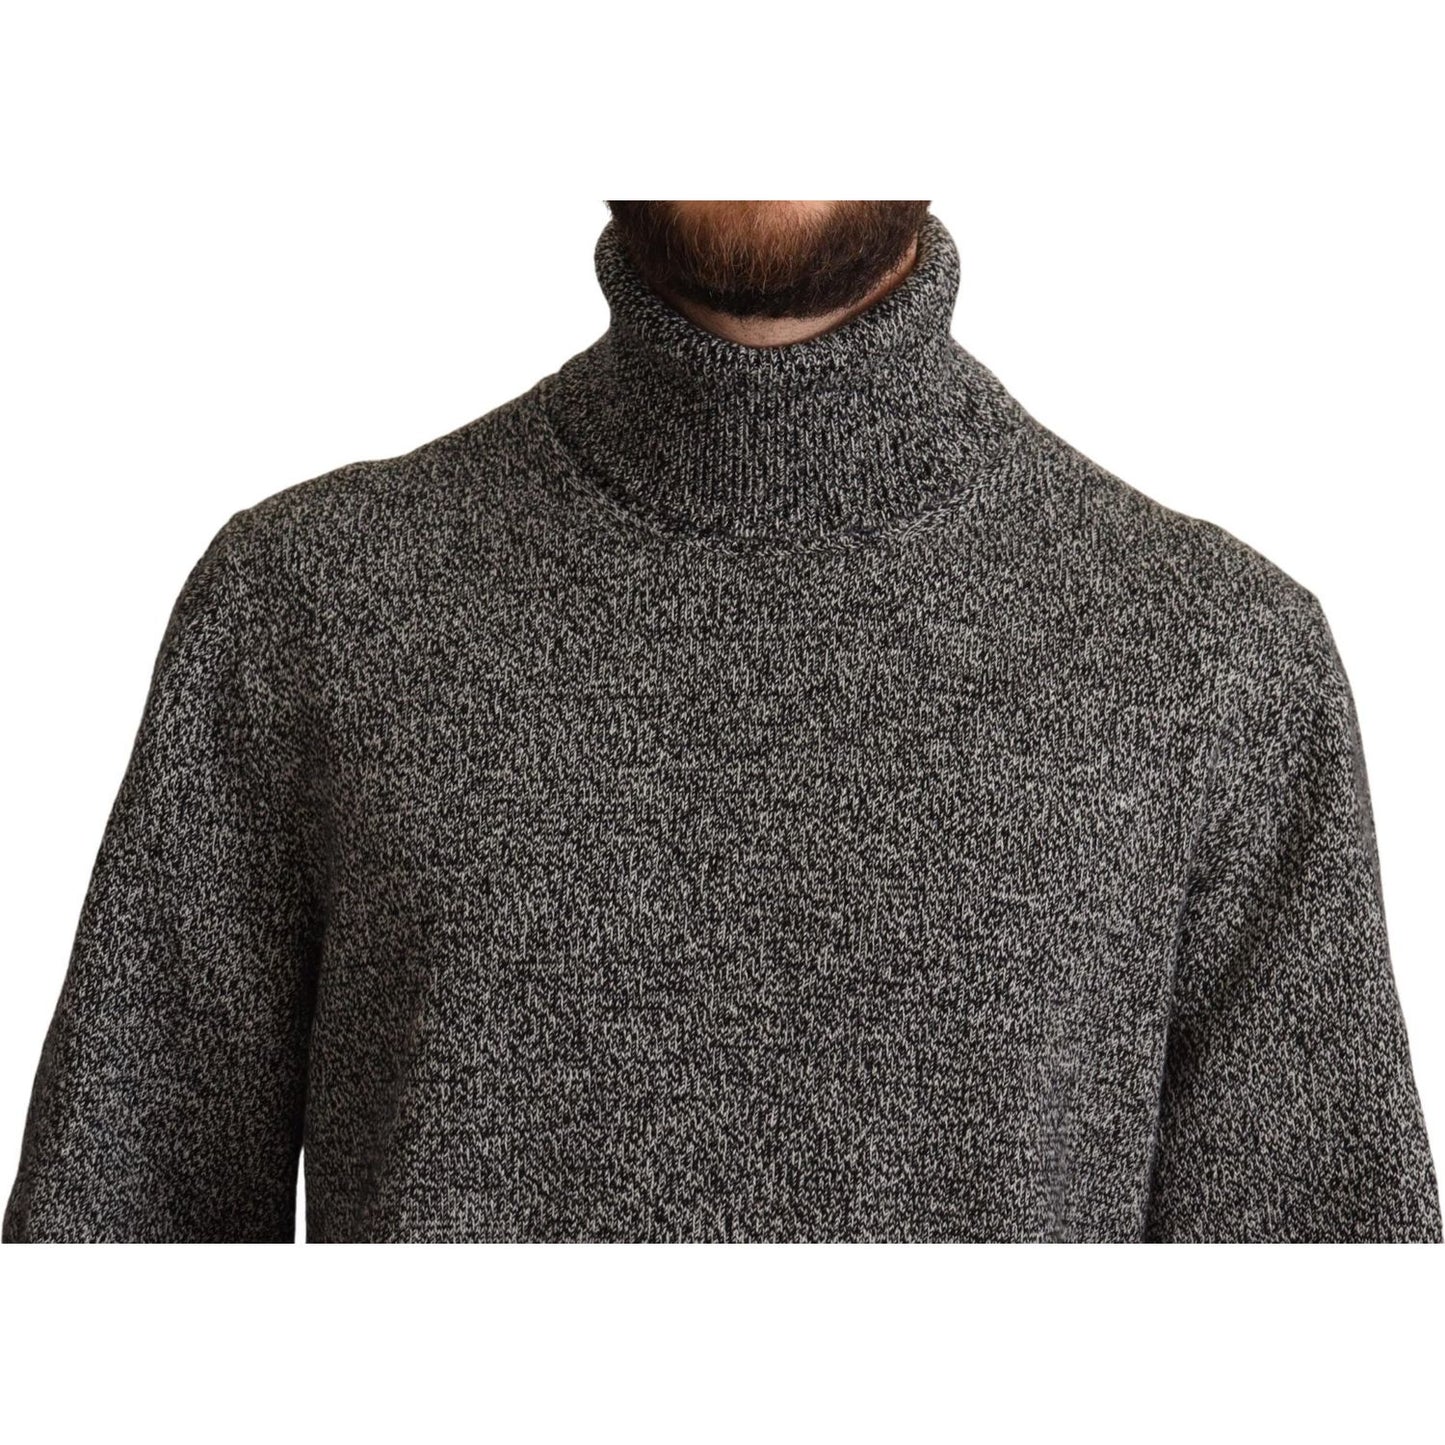 Dolce & Gabbana Elegant Gray Cashmere Turtleneck Sweater MAN SWEATERS gray-turtle-neck-cashmere-pullover-sweater IMG_0171-scaled-1010f324-c51.jpg